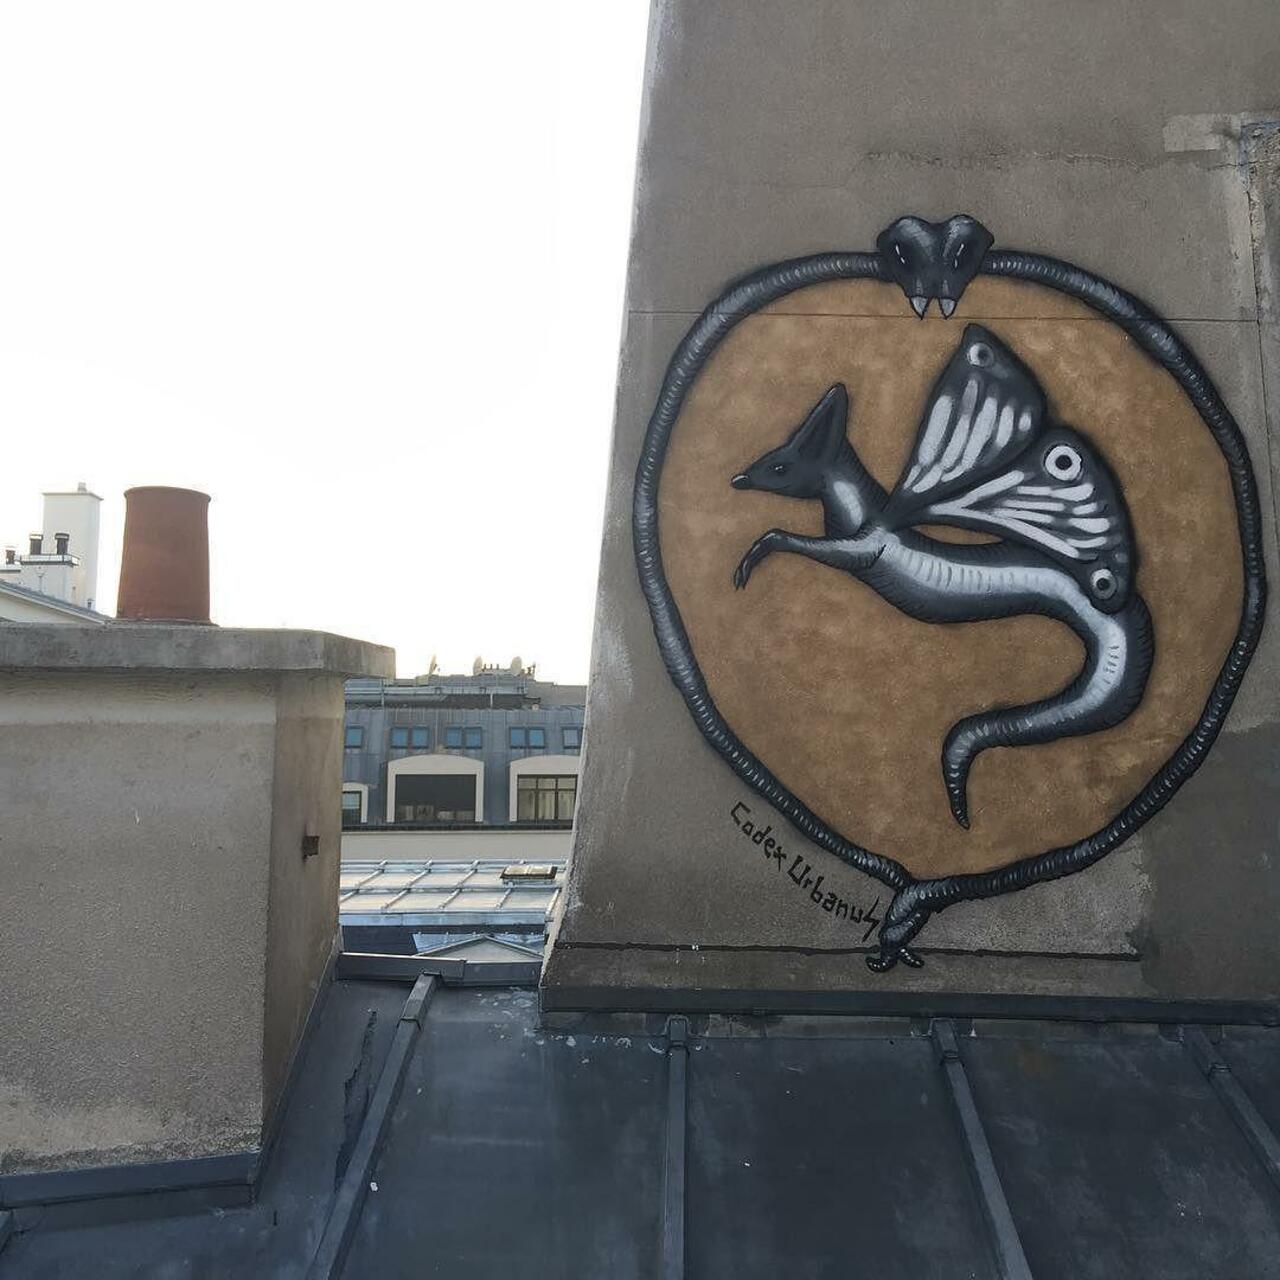 RT @circumjacent_fr: #Paris #graffiti photo by @codexurbanus http://ift.tt/1MrhLBT #StreetArt http://t.co/TsjhW9CgEj